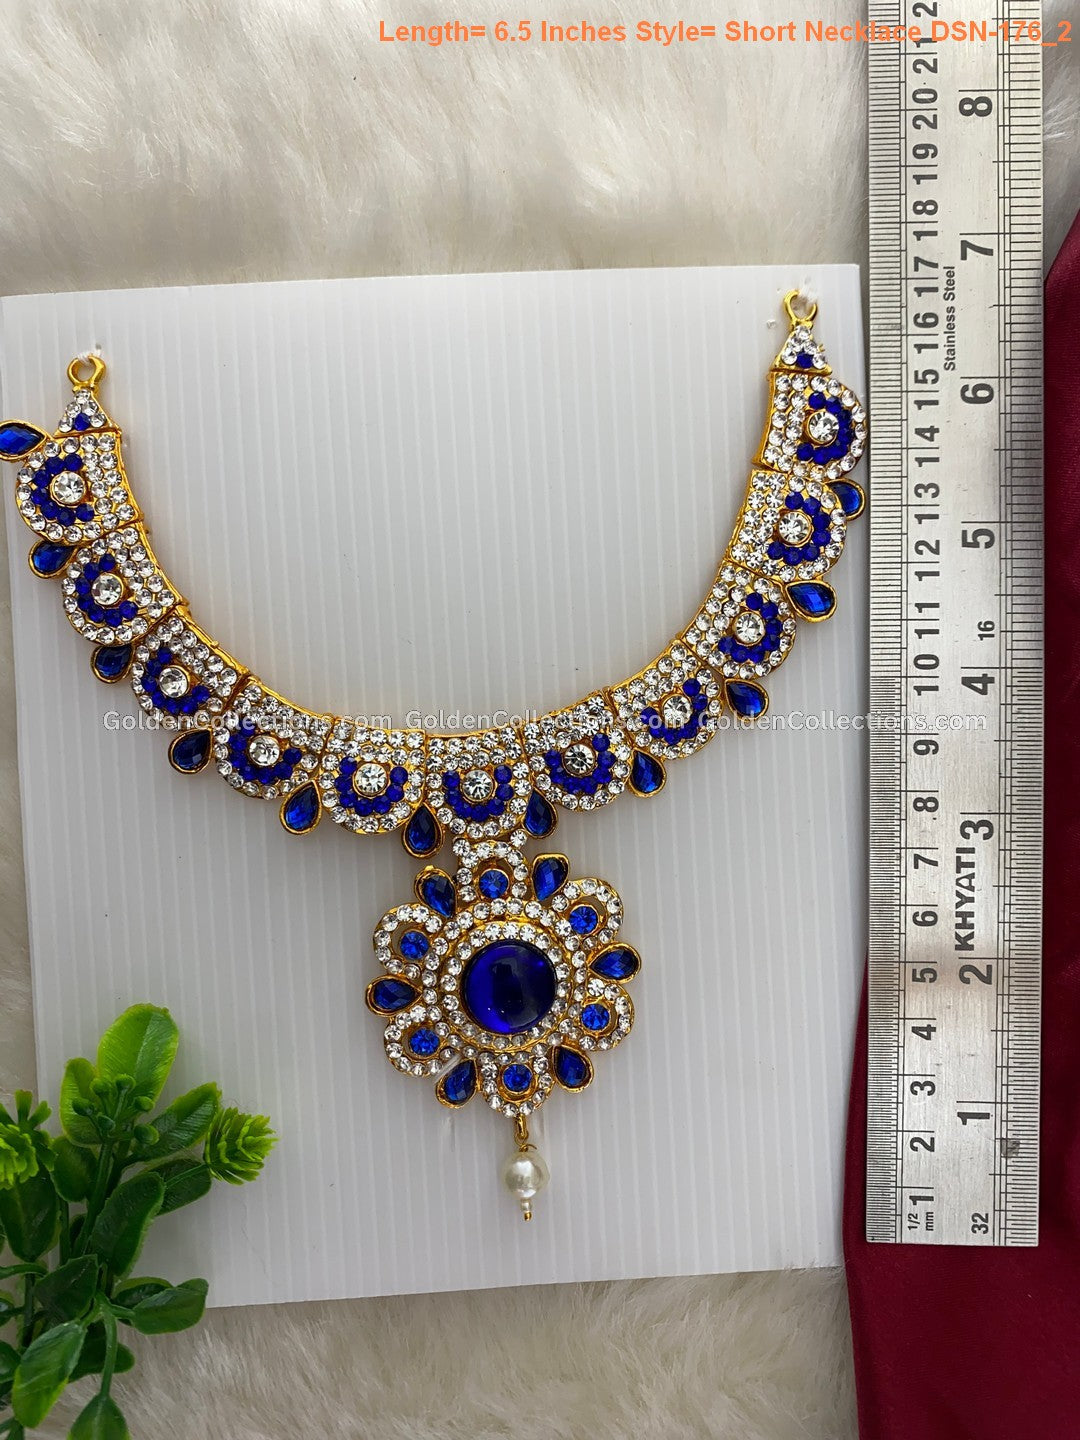 Deity Decorative Short Necklace - Hindu God Jewellery Set - DSN-176 2